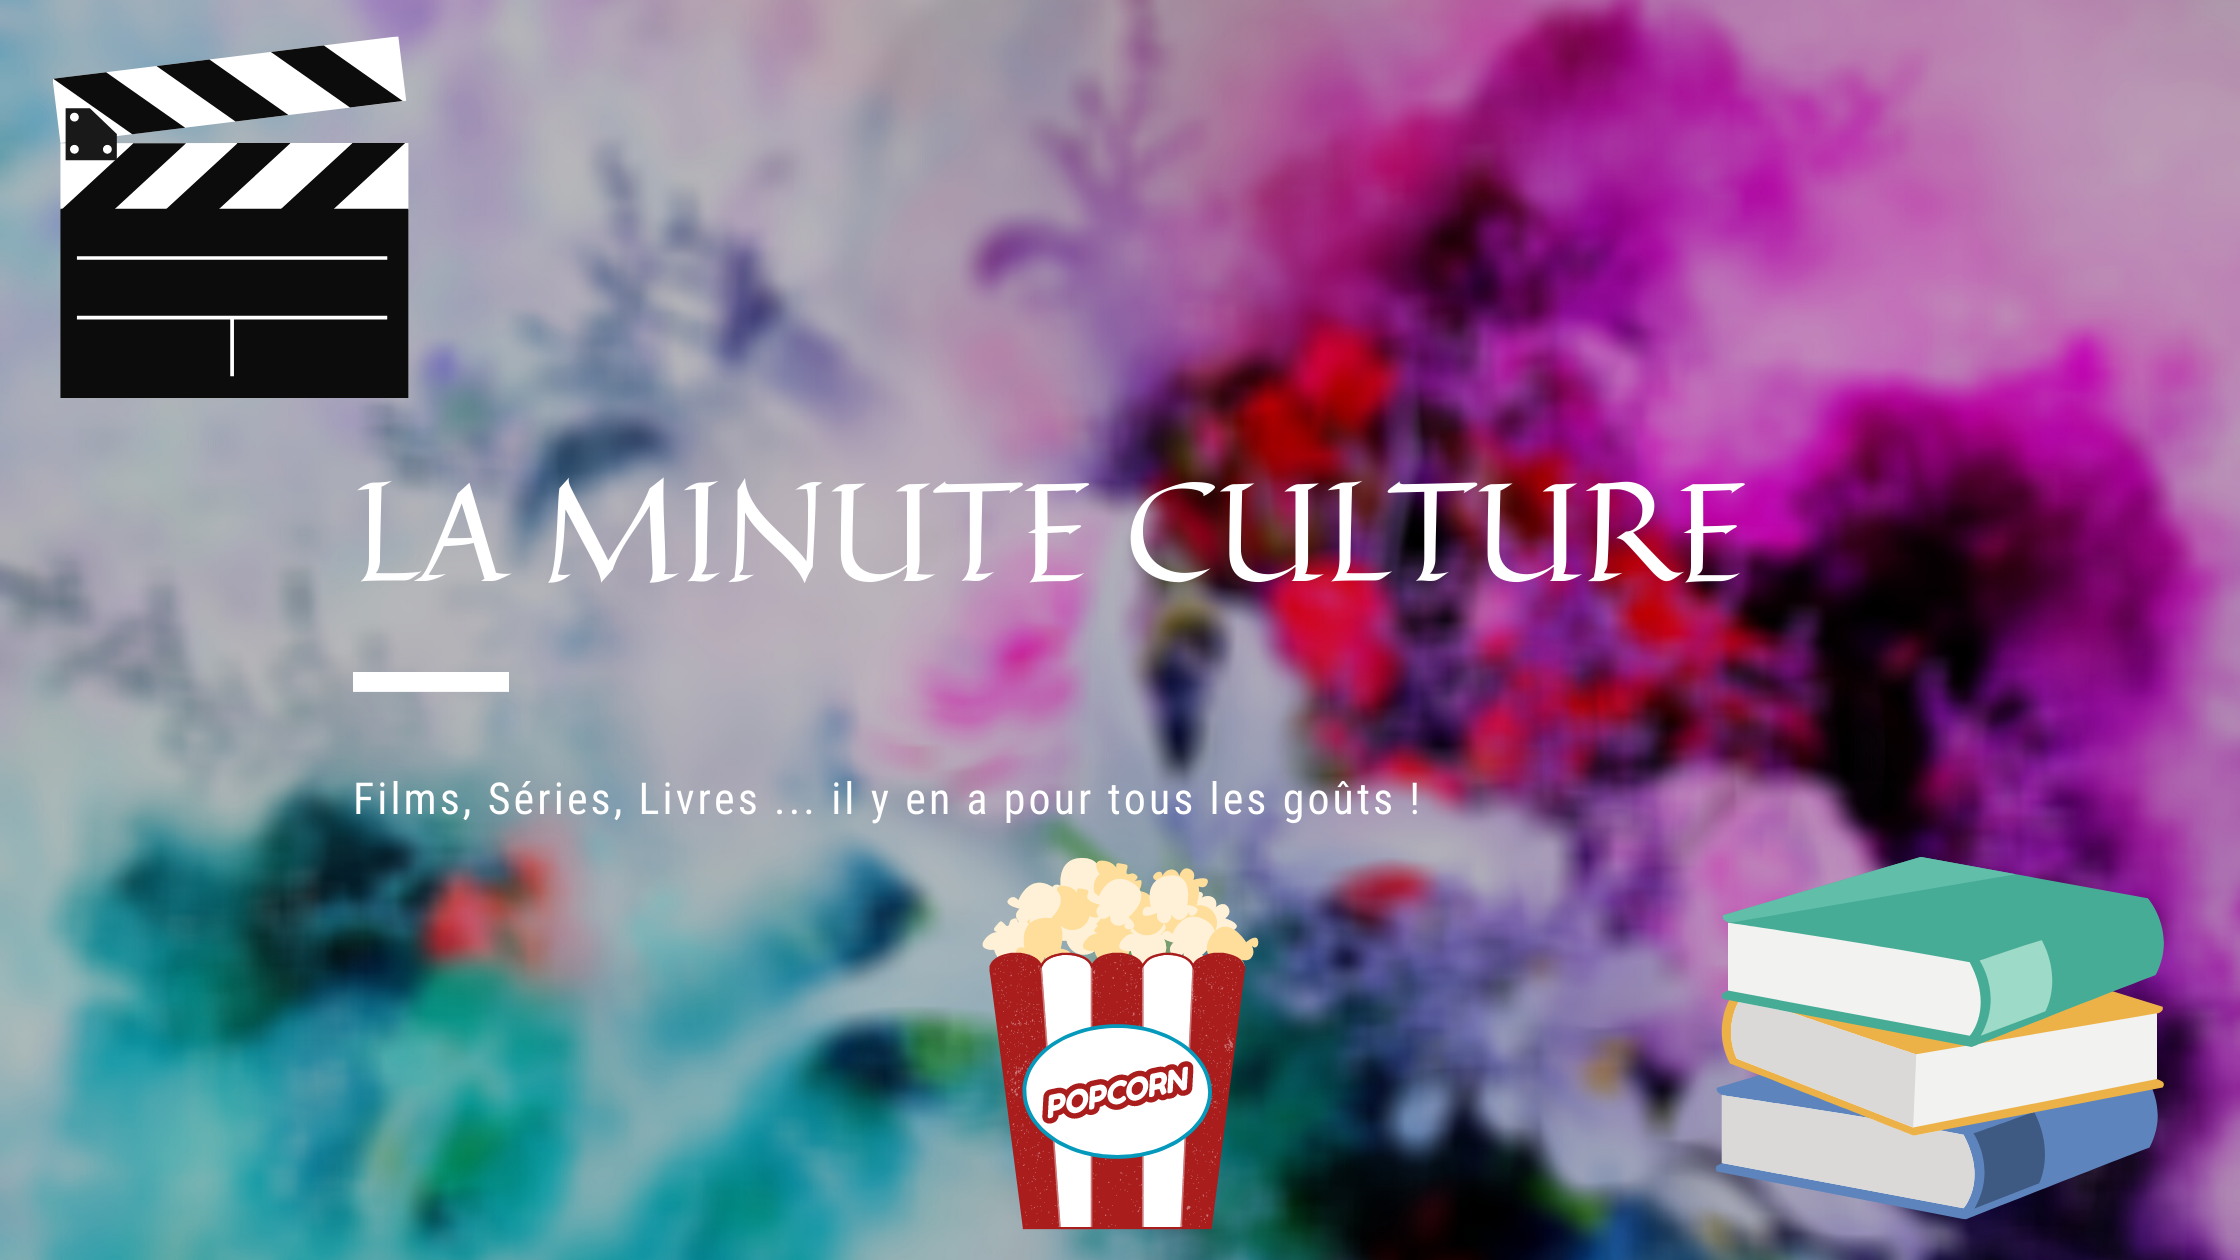 La minute culture - épisode 10